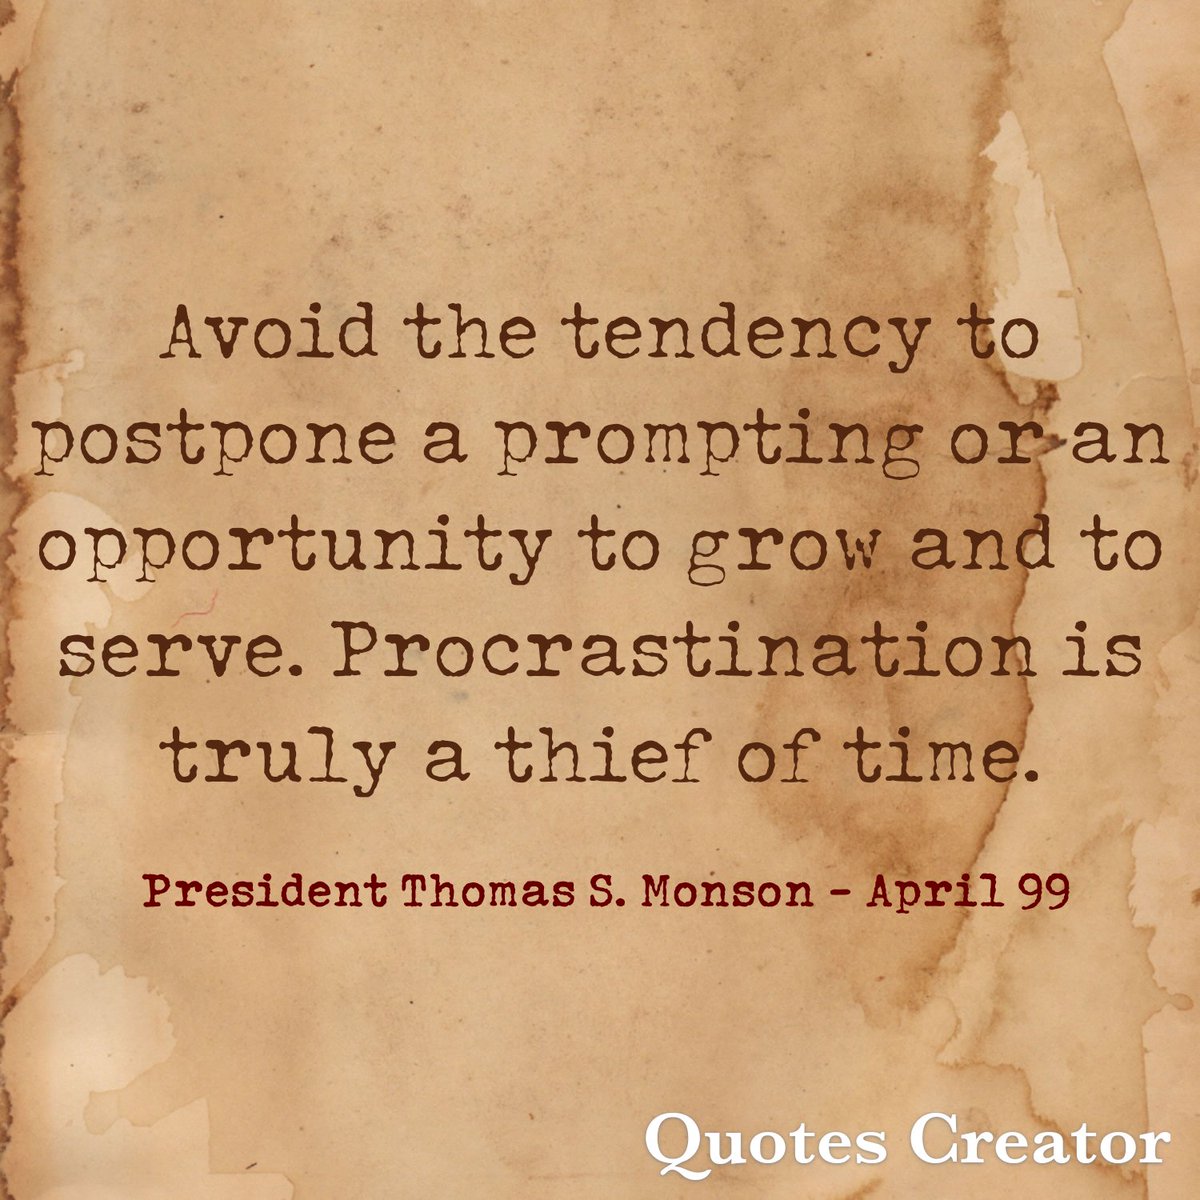 Don't procrastinate! #LatterDaySaint #OnAJourney #TwitterStake #GeneralConference #GenConf #April99 #PresidentMonson